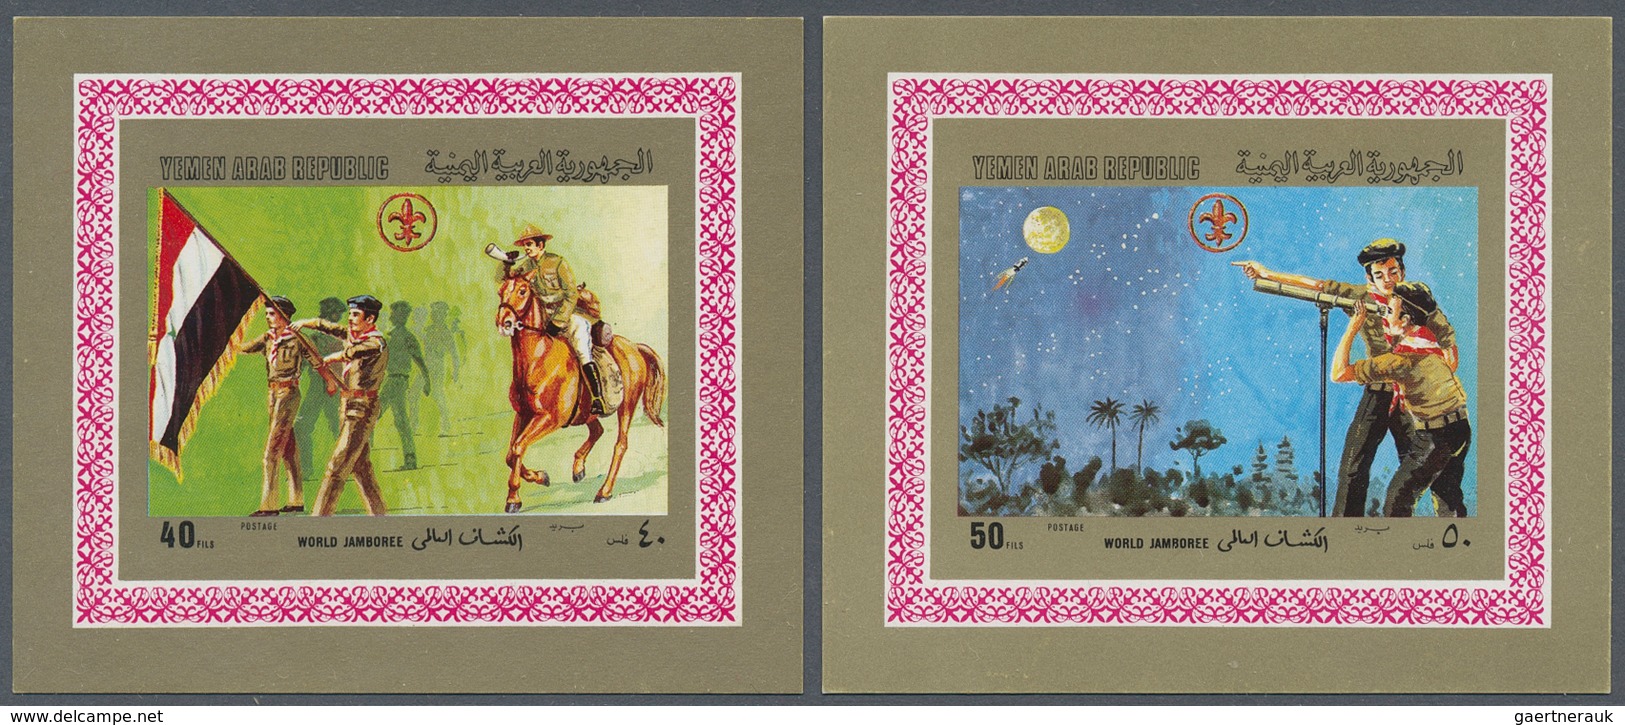 Jemen: 1961/1982, comprehensive MNH accumulation of sheets, souvenir sheets and especially de luxe s